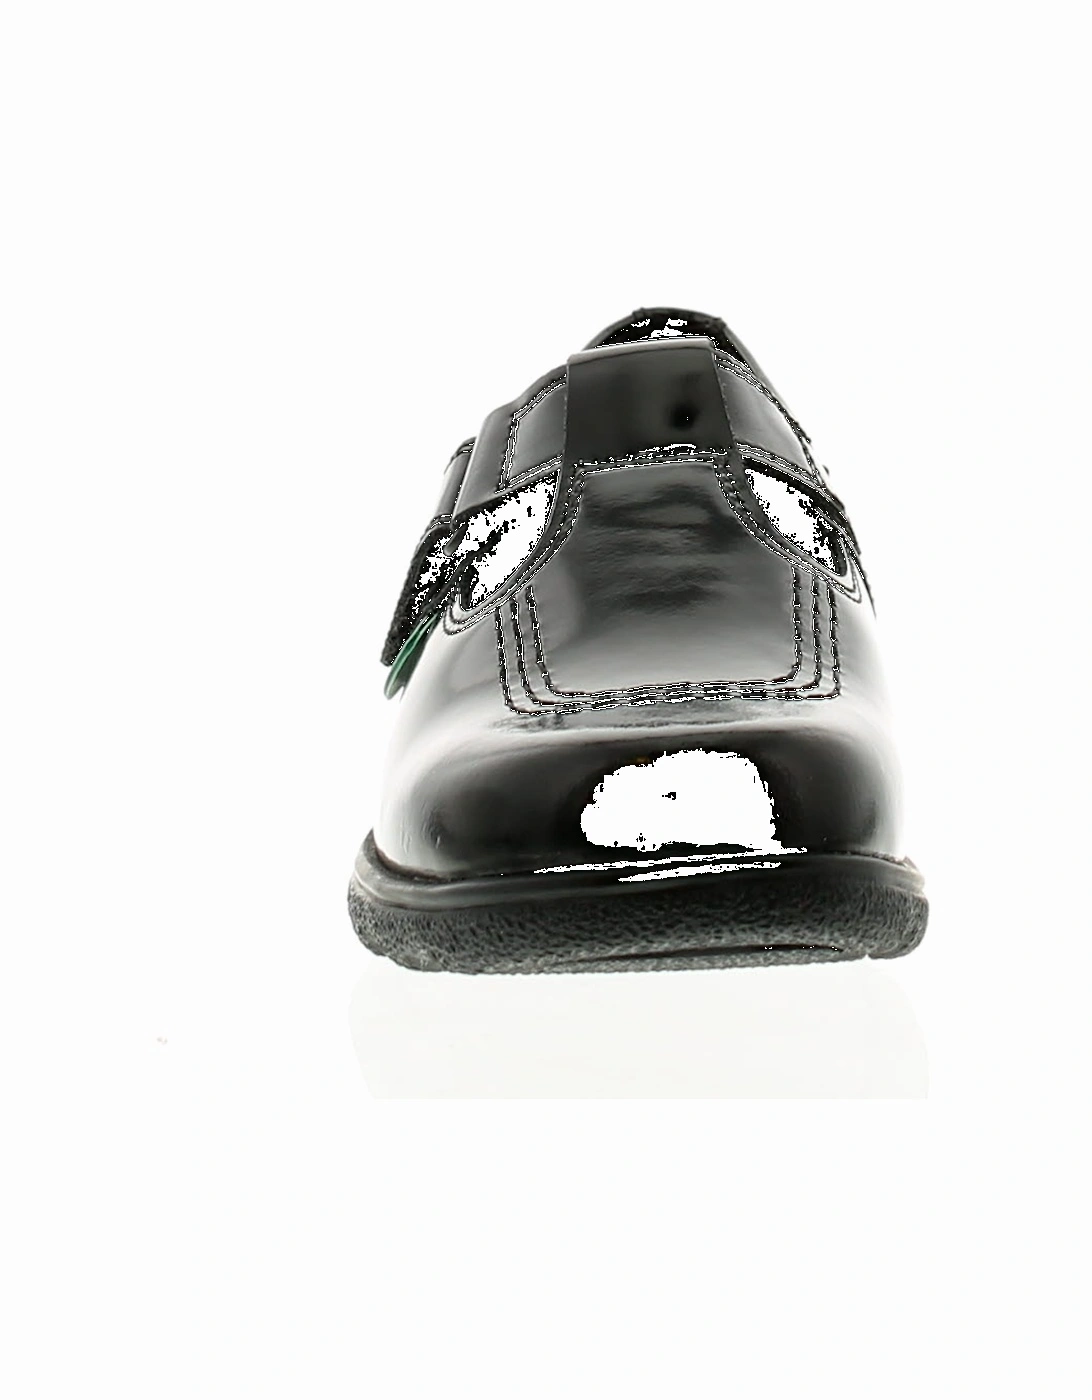 Girls School Shoes Fragma T Bar Leather black patent UK Size